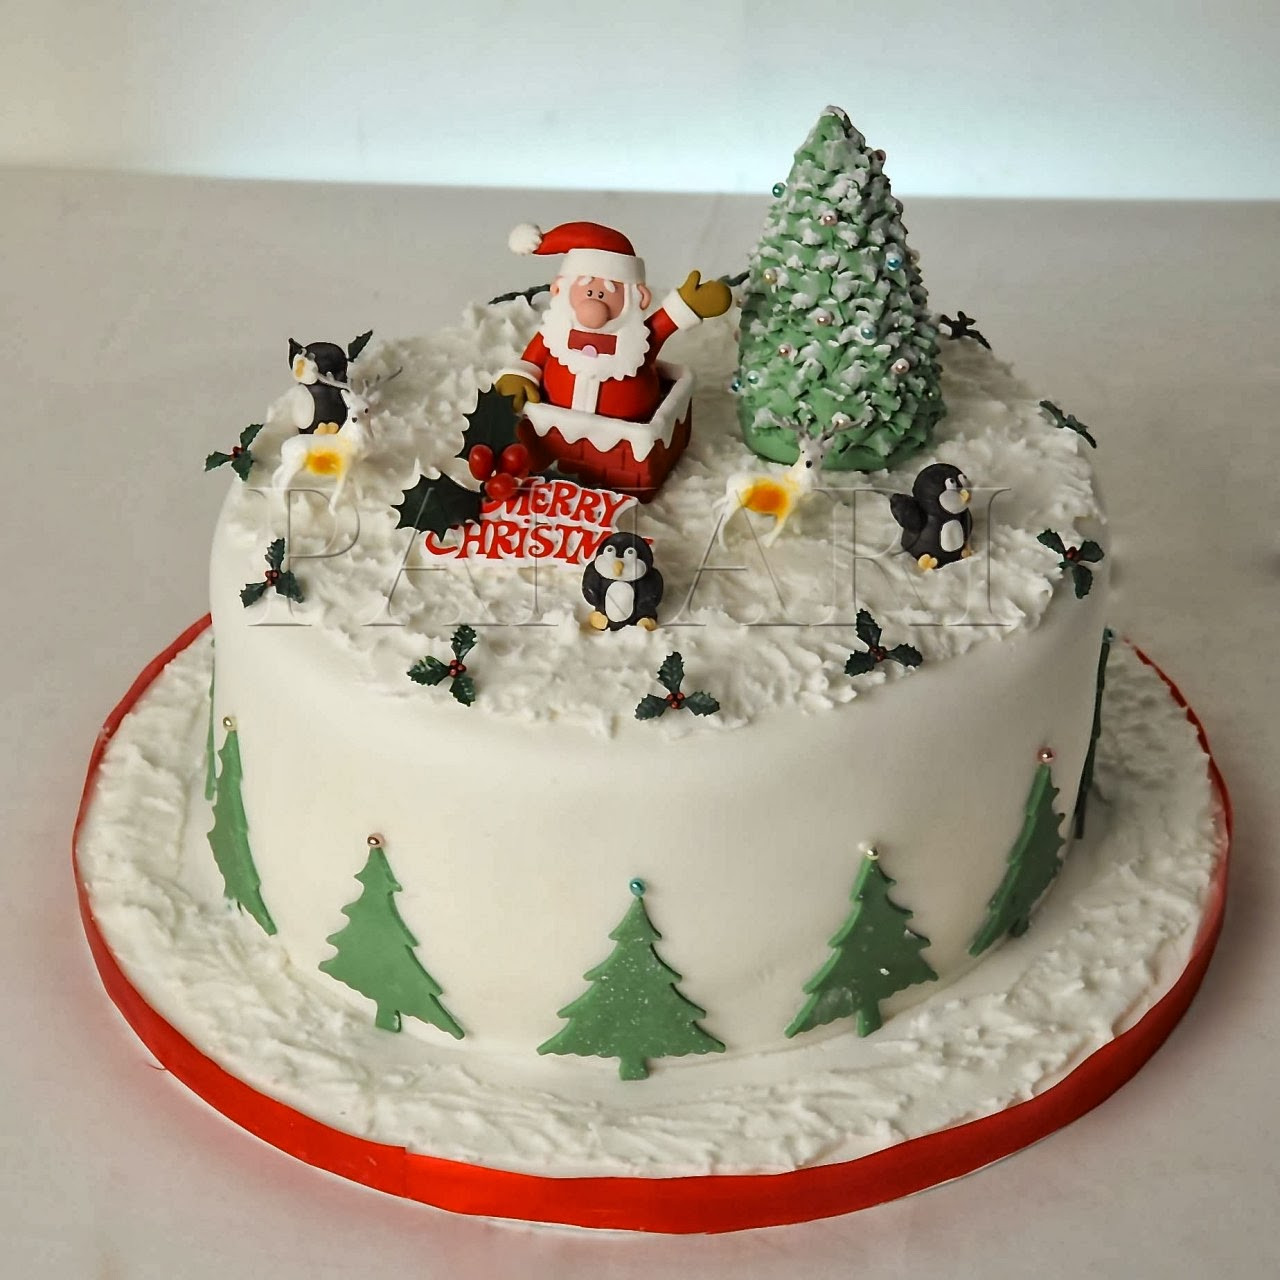 Merry Christmas Cakes
 Merry Christmas Cake HD Wallpapers Blog